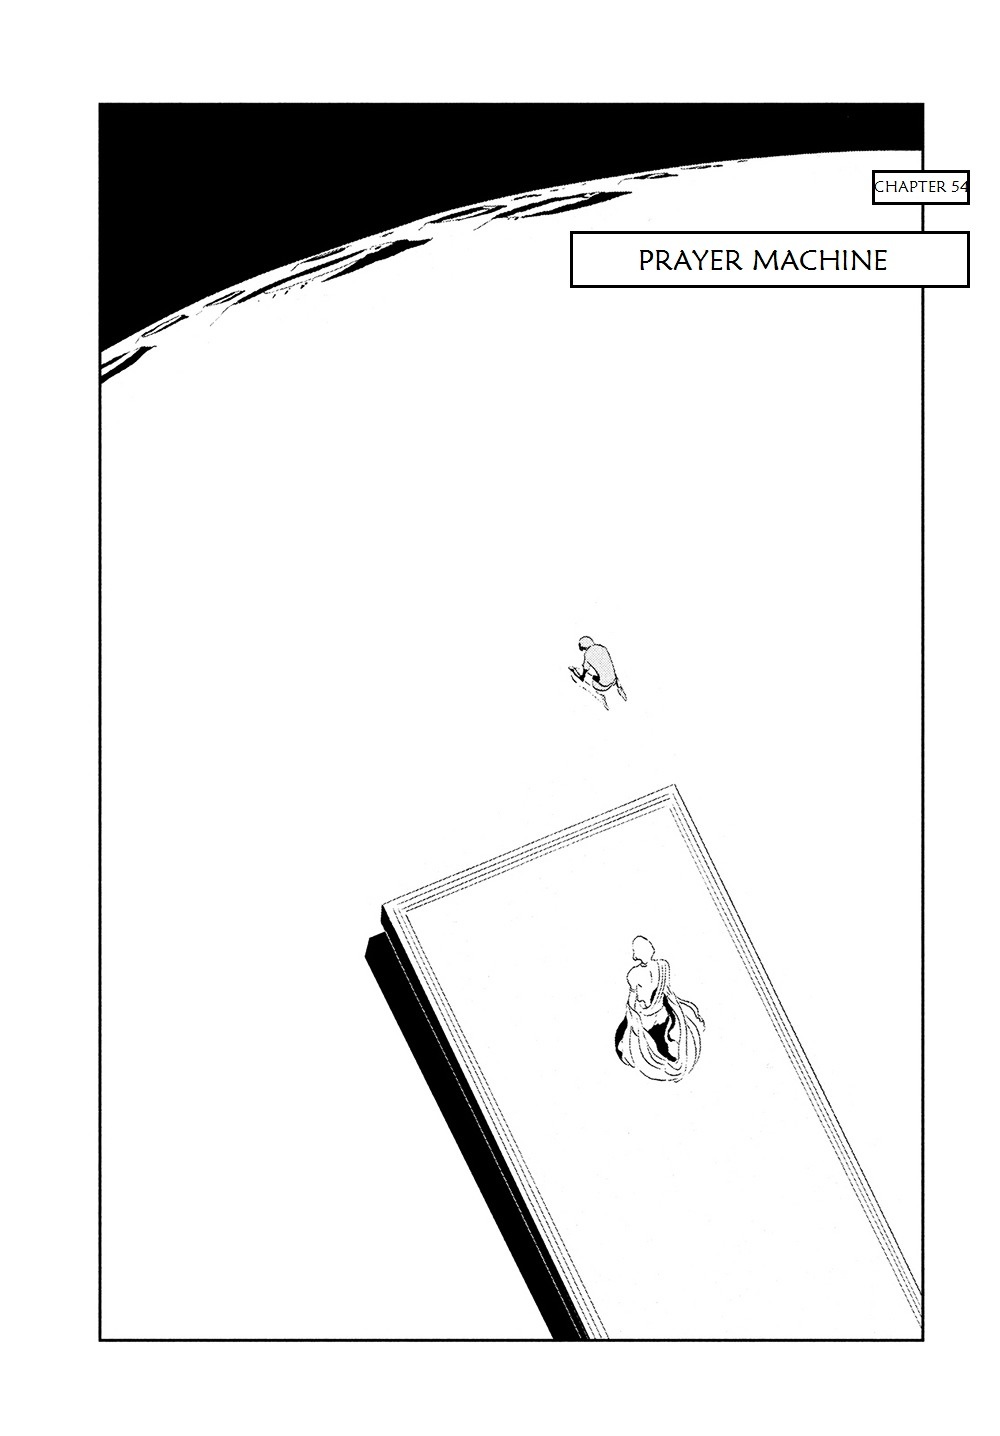 Houseki No Kuni Vol.8 Chapter 54 : Prayer Machine - Picture 2